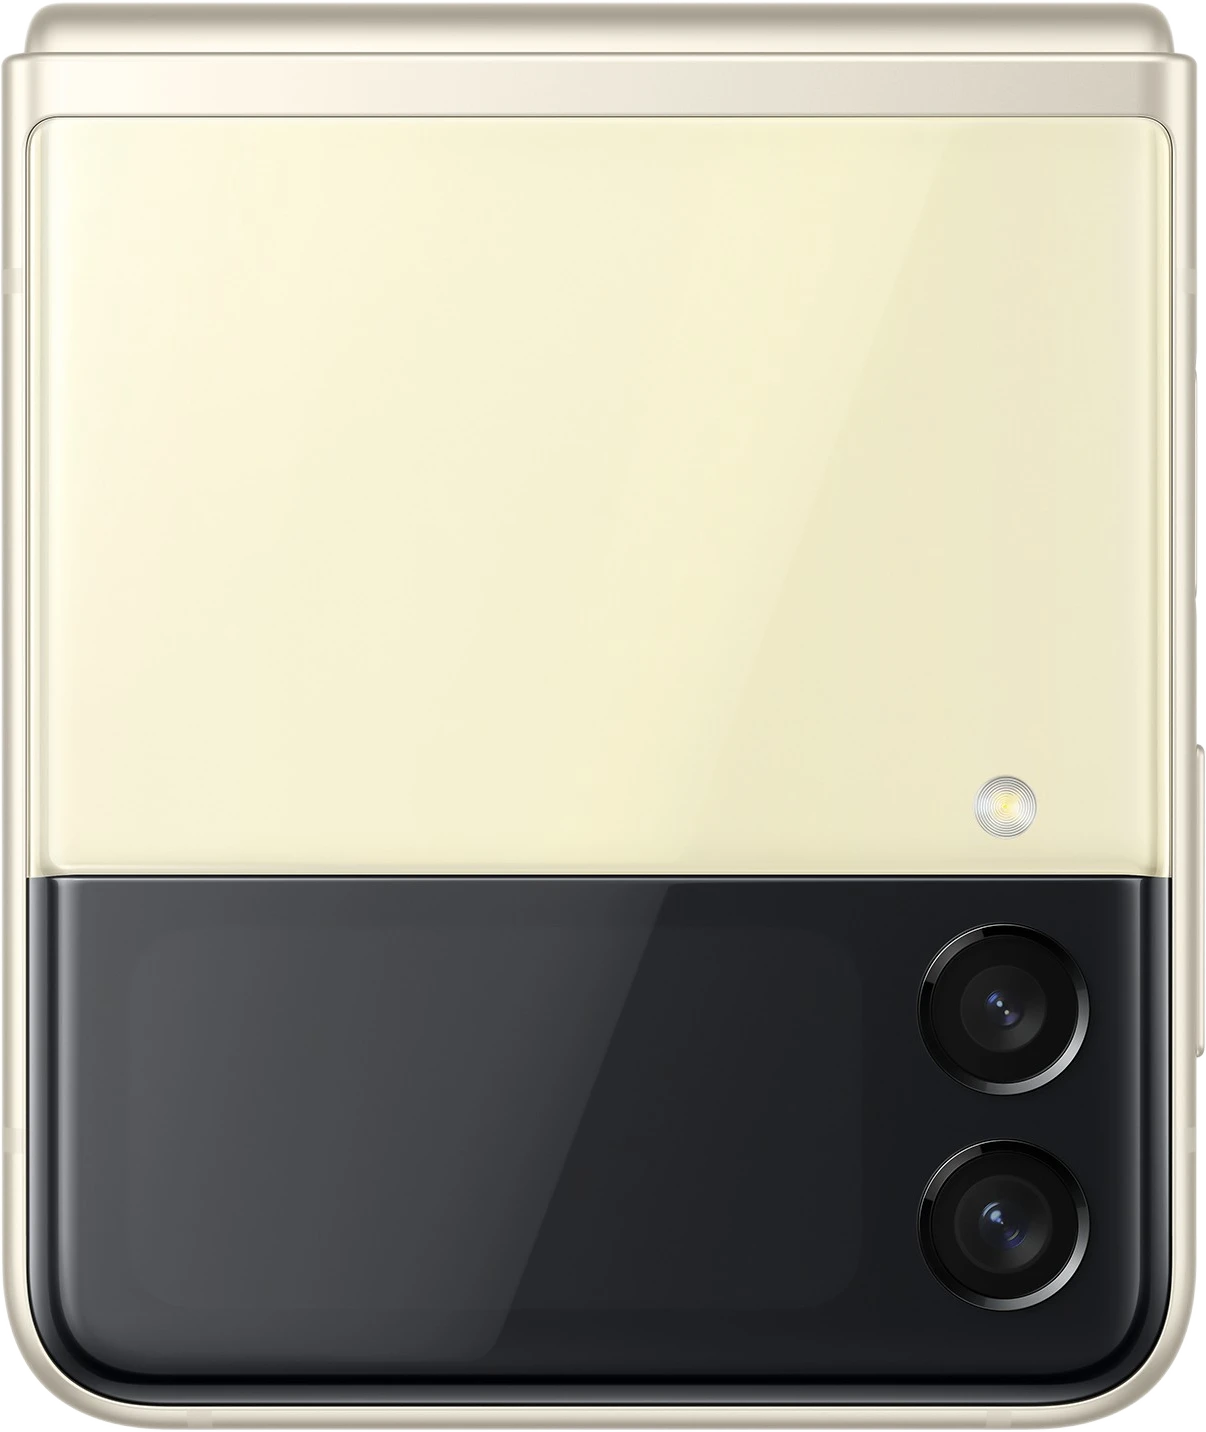 Rent Samsung Galaxy Z Flip 3 Smartphone - 256GB - Dual Sim from €41.90 per  month